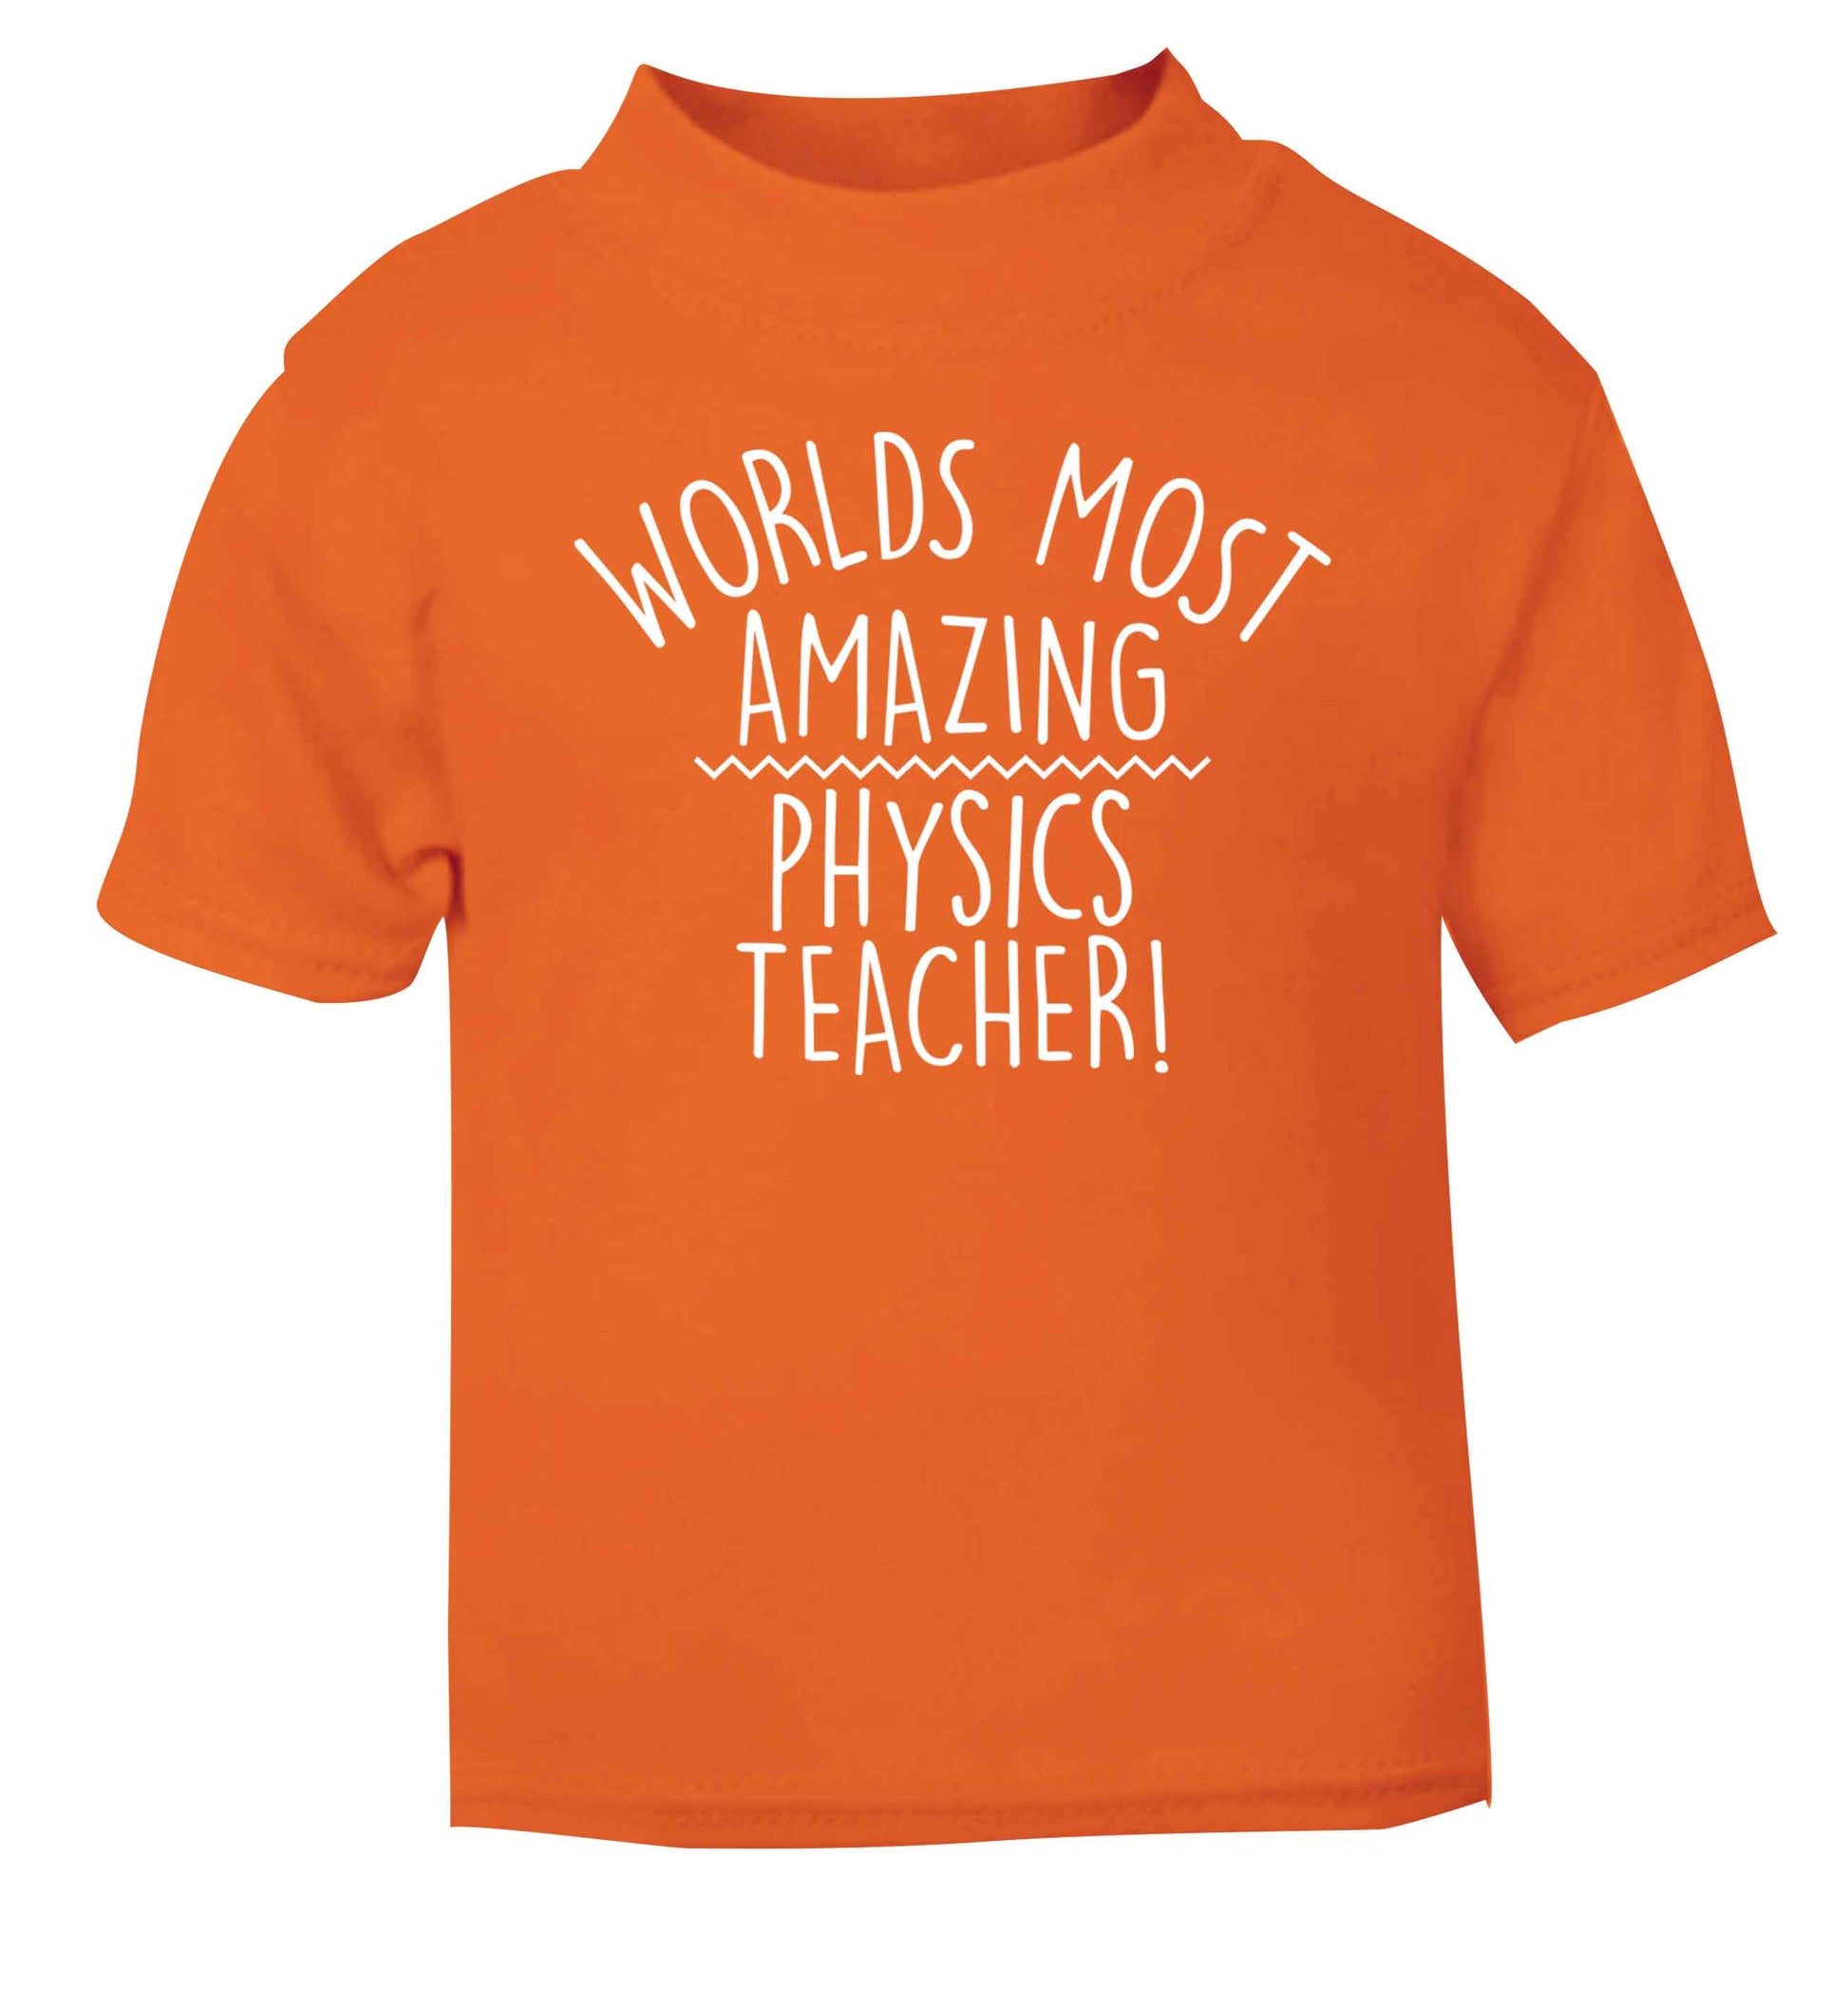 Worlds most amazing physics teacher orange baby toddler Tshirt 2 Years